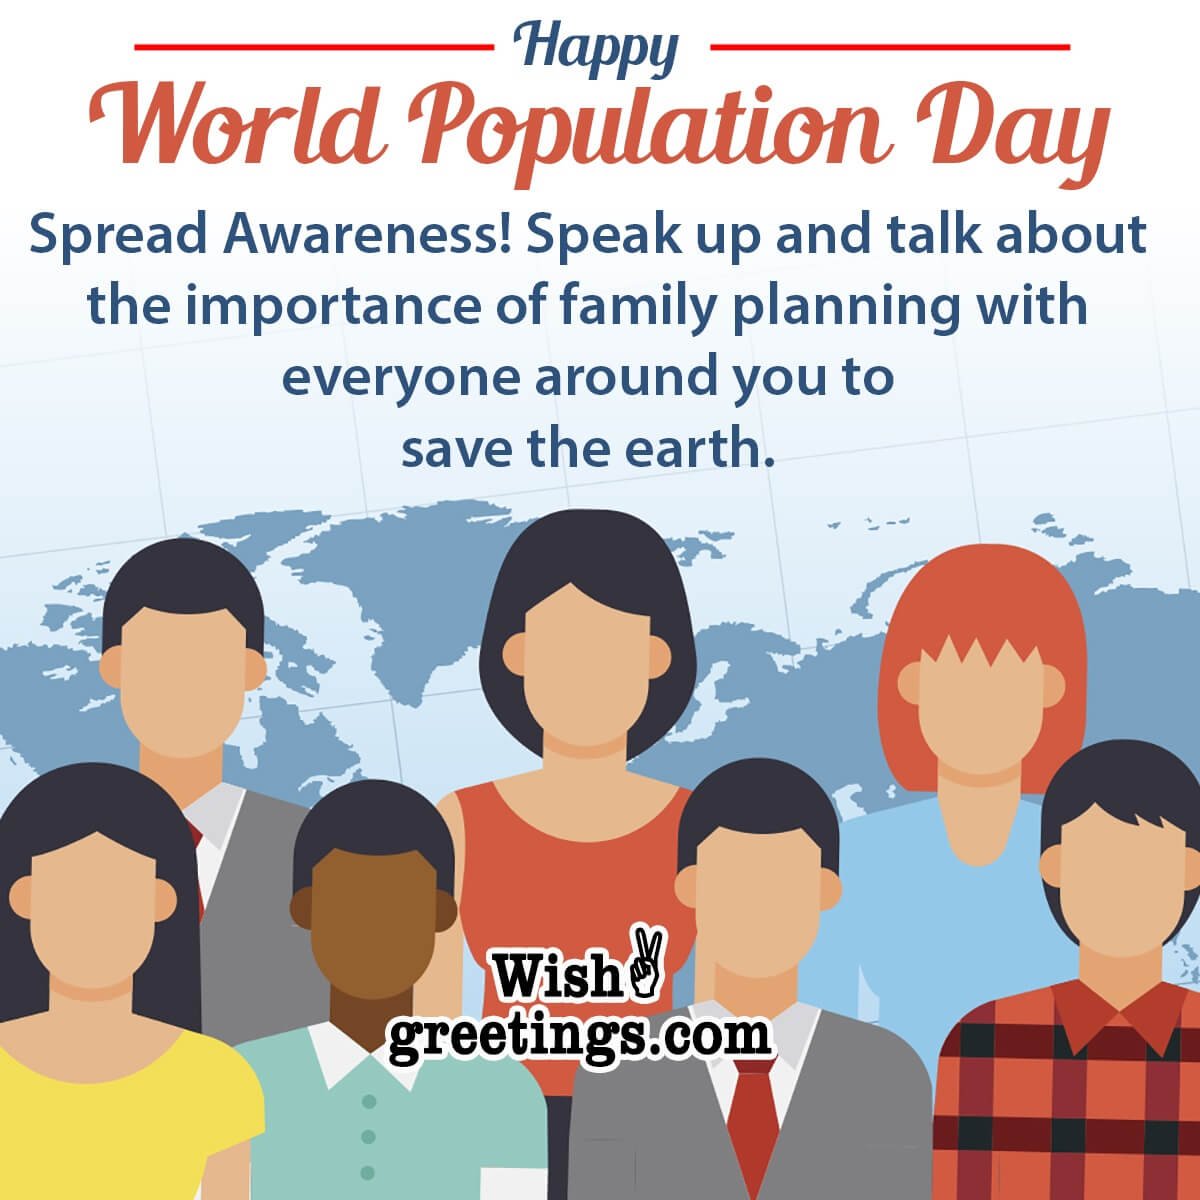 Happy World Population Day